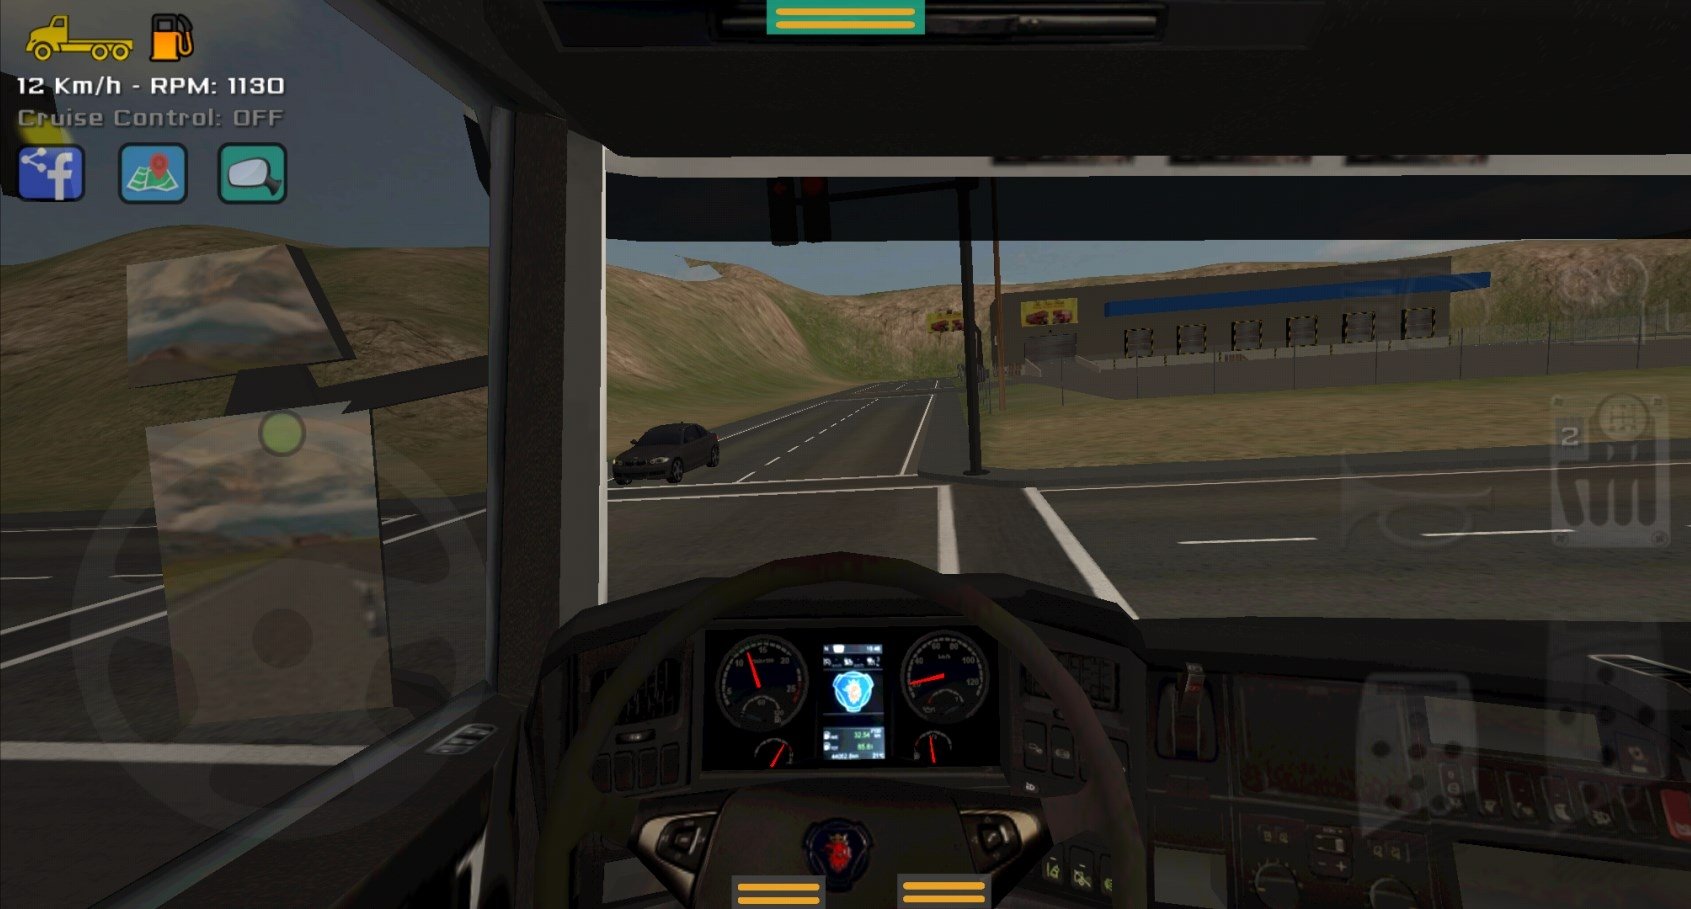 New Update! Grand Truck Simulator 2 Mod Unlimited Monday+E